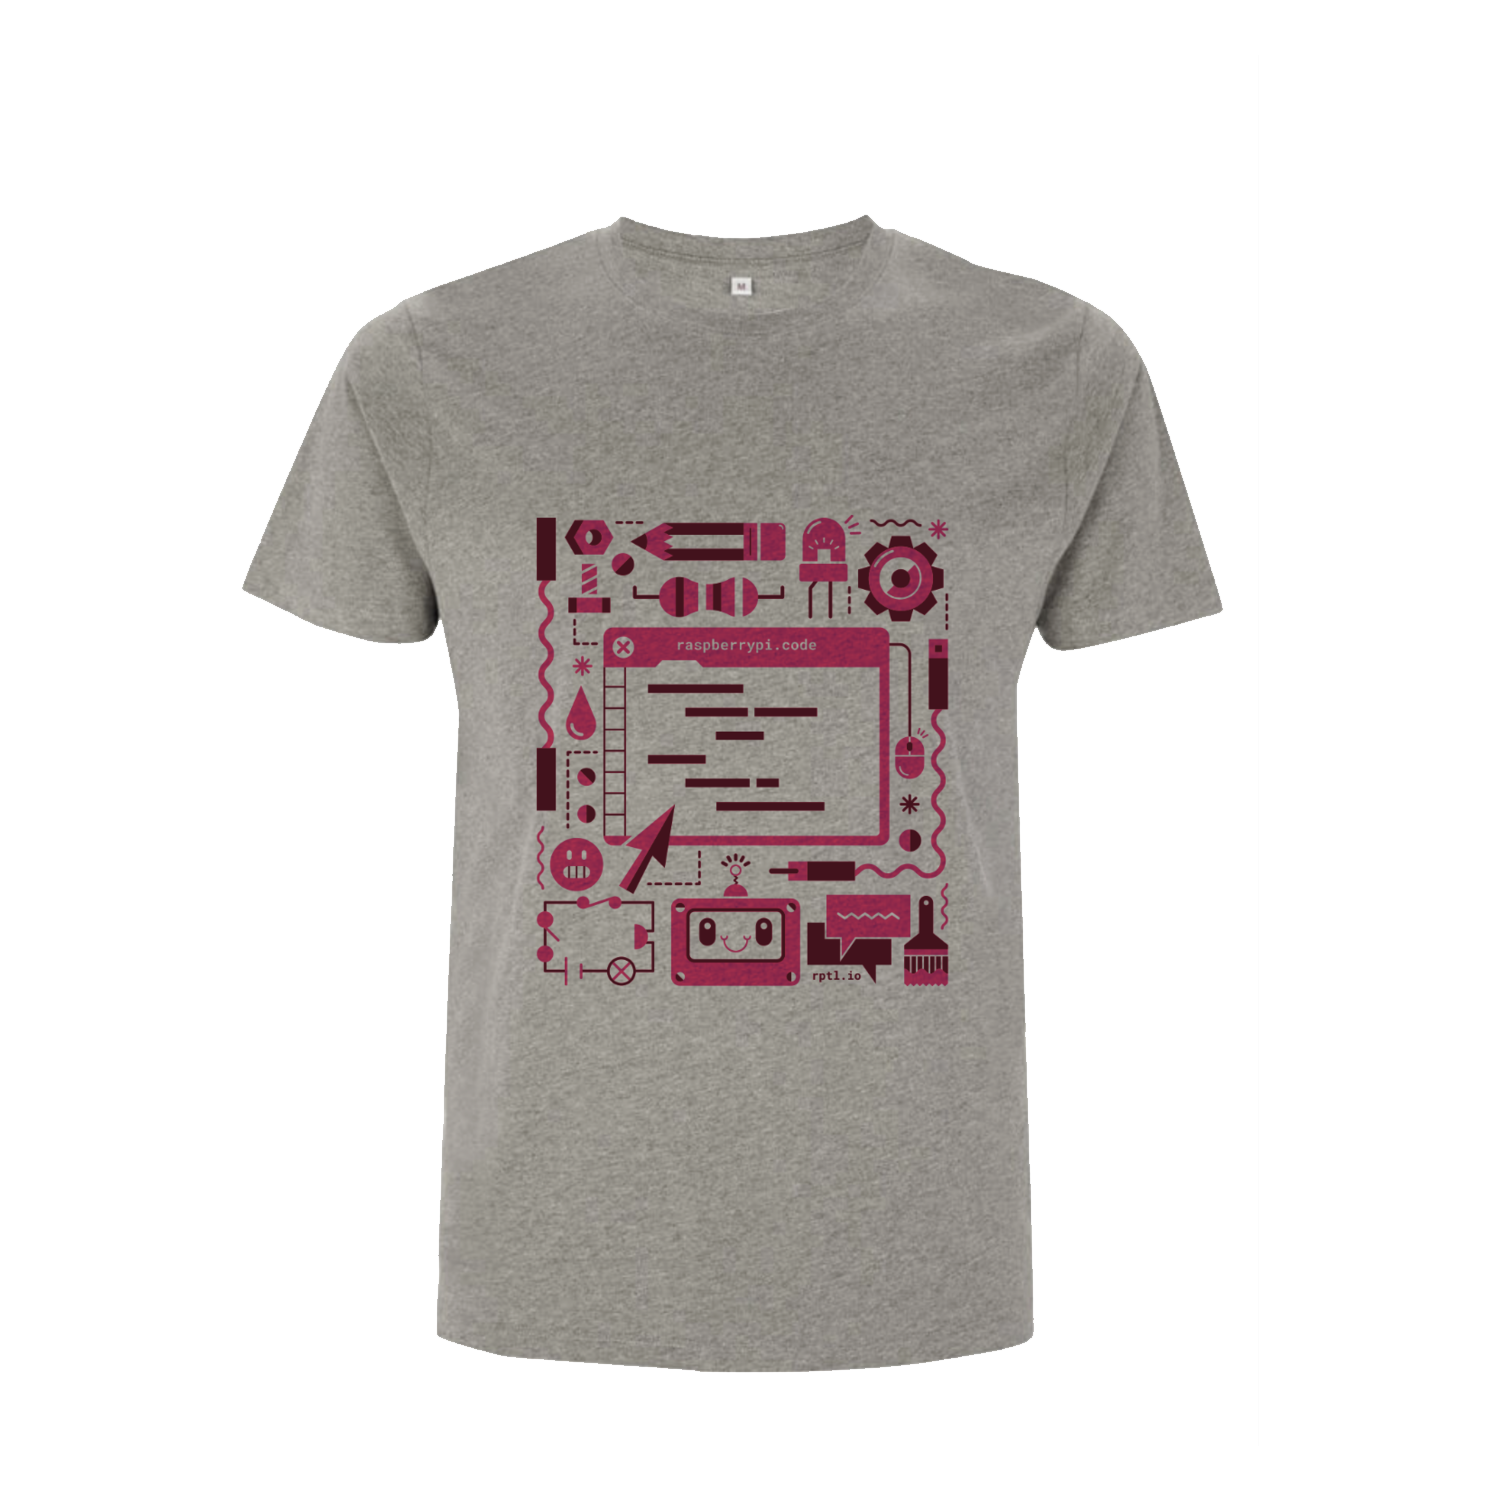 Raspberry Pi Shirt - Large